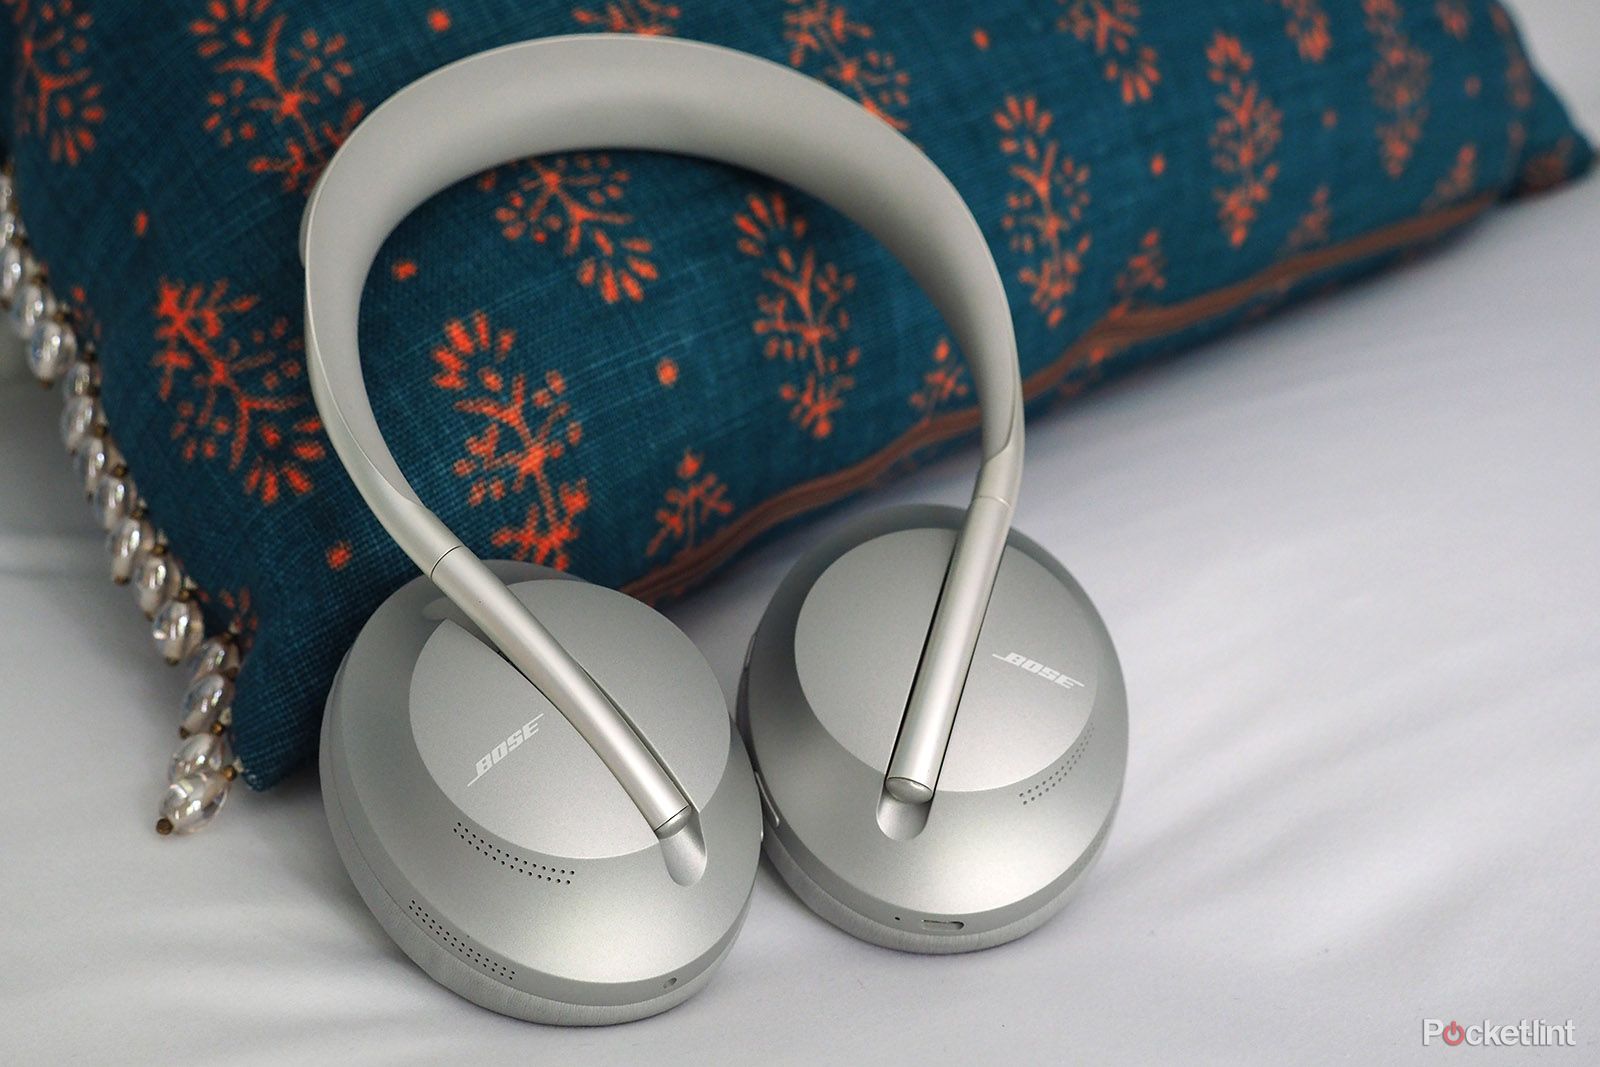 Bose Smart Noise Cancelling Headphones 700 review lead image 1